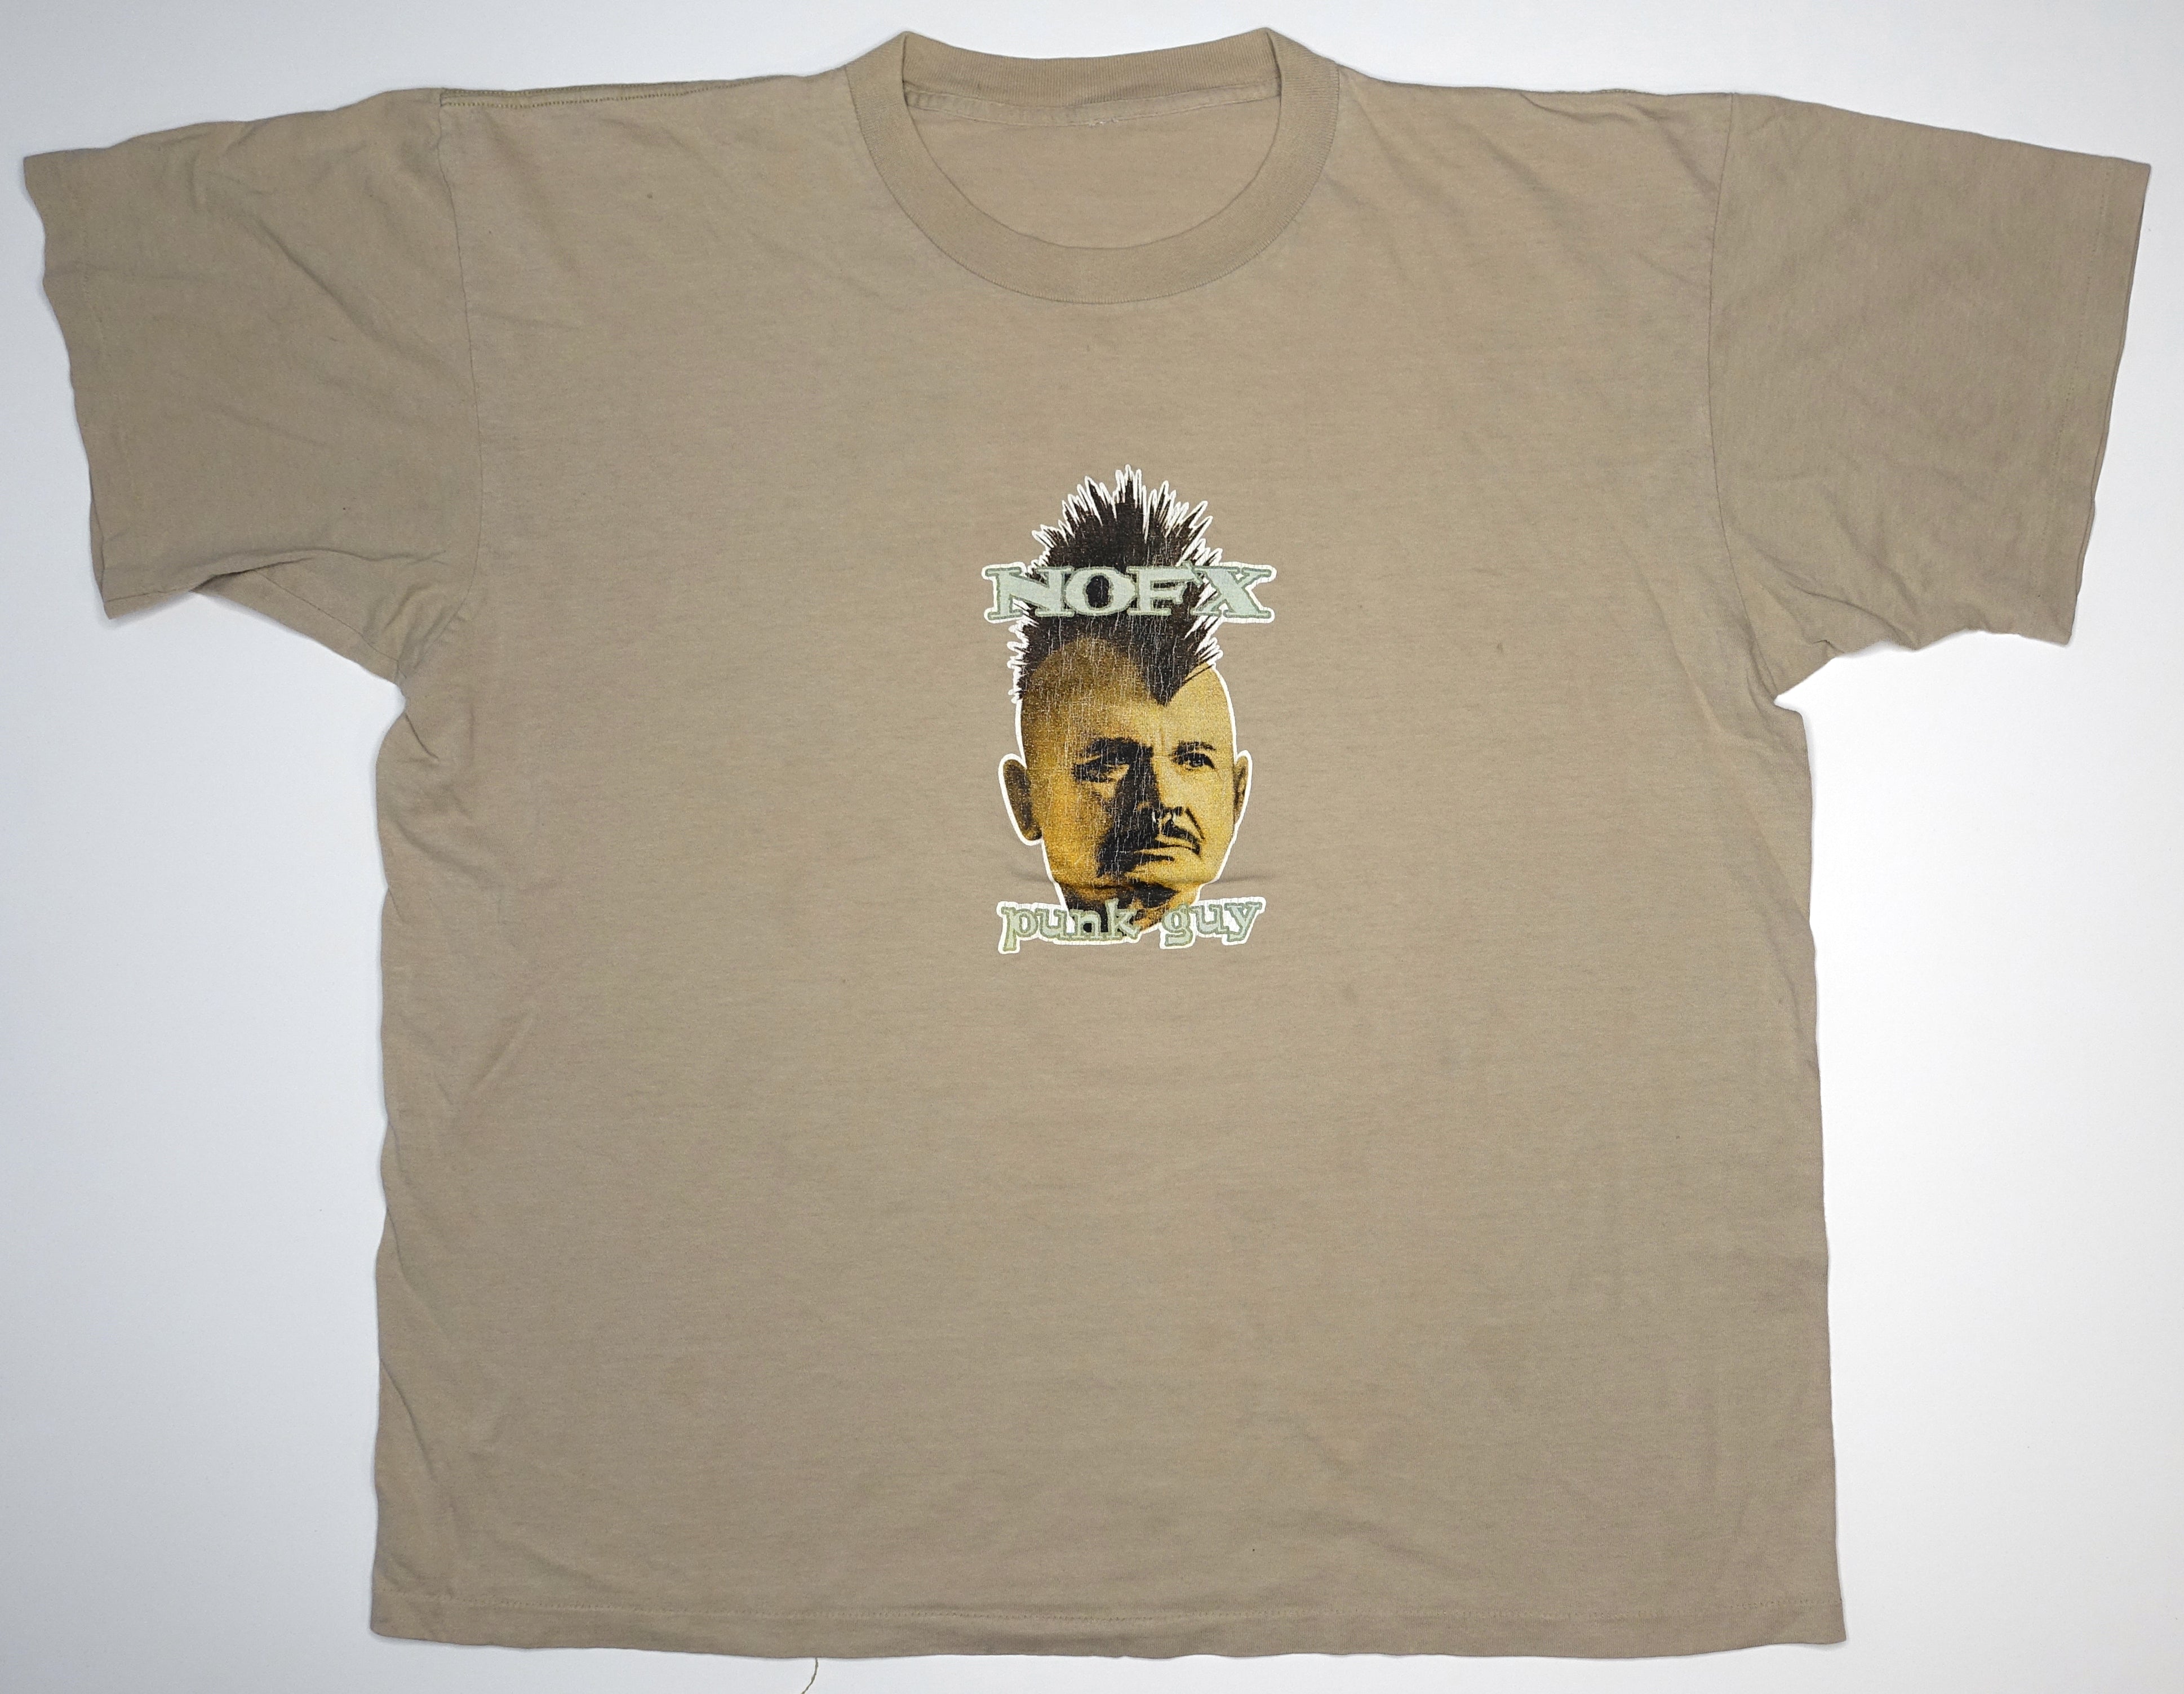 NOFX - Charles Bronson / Punk In Drublic 1994 Tour Shirt Size XL